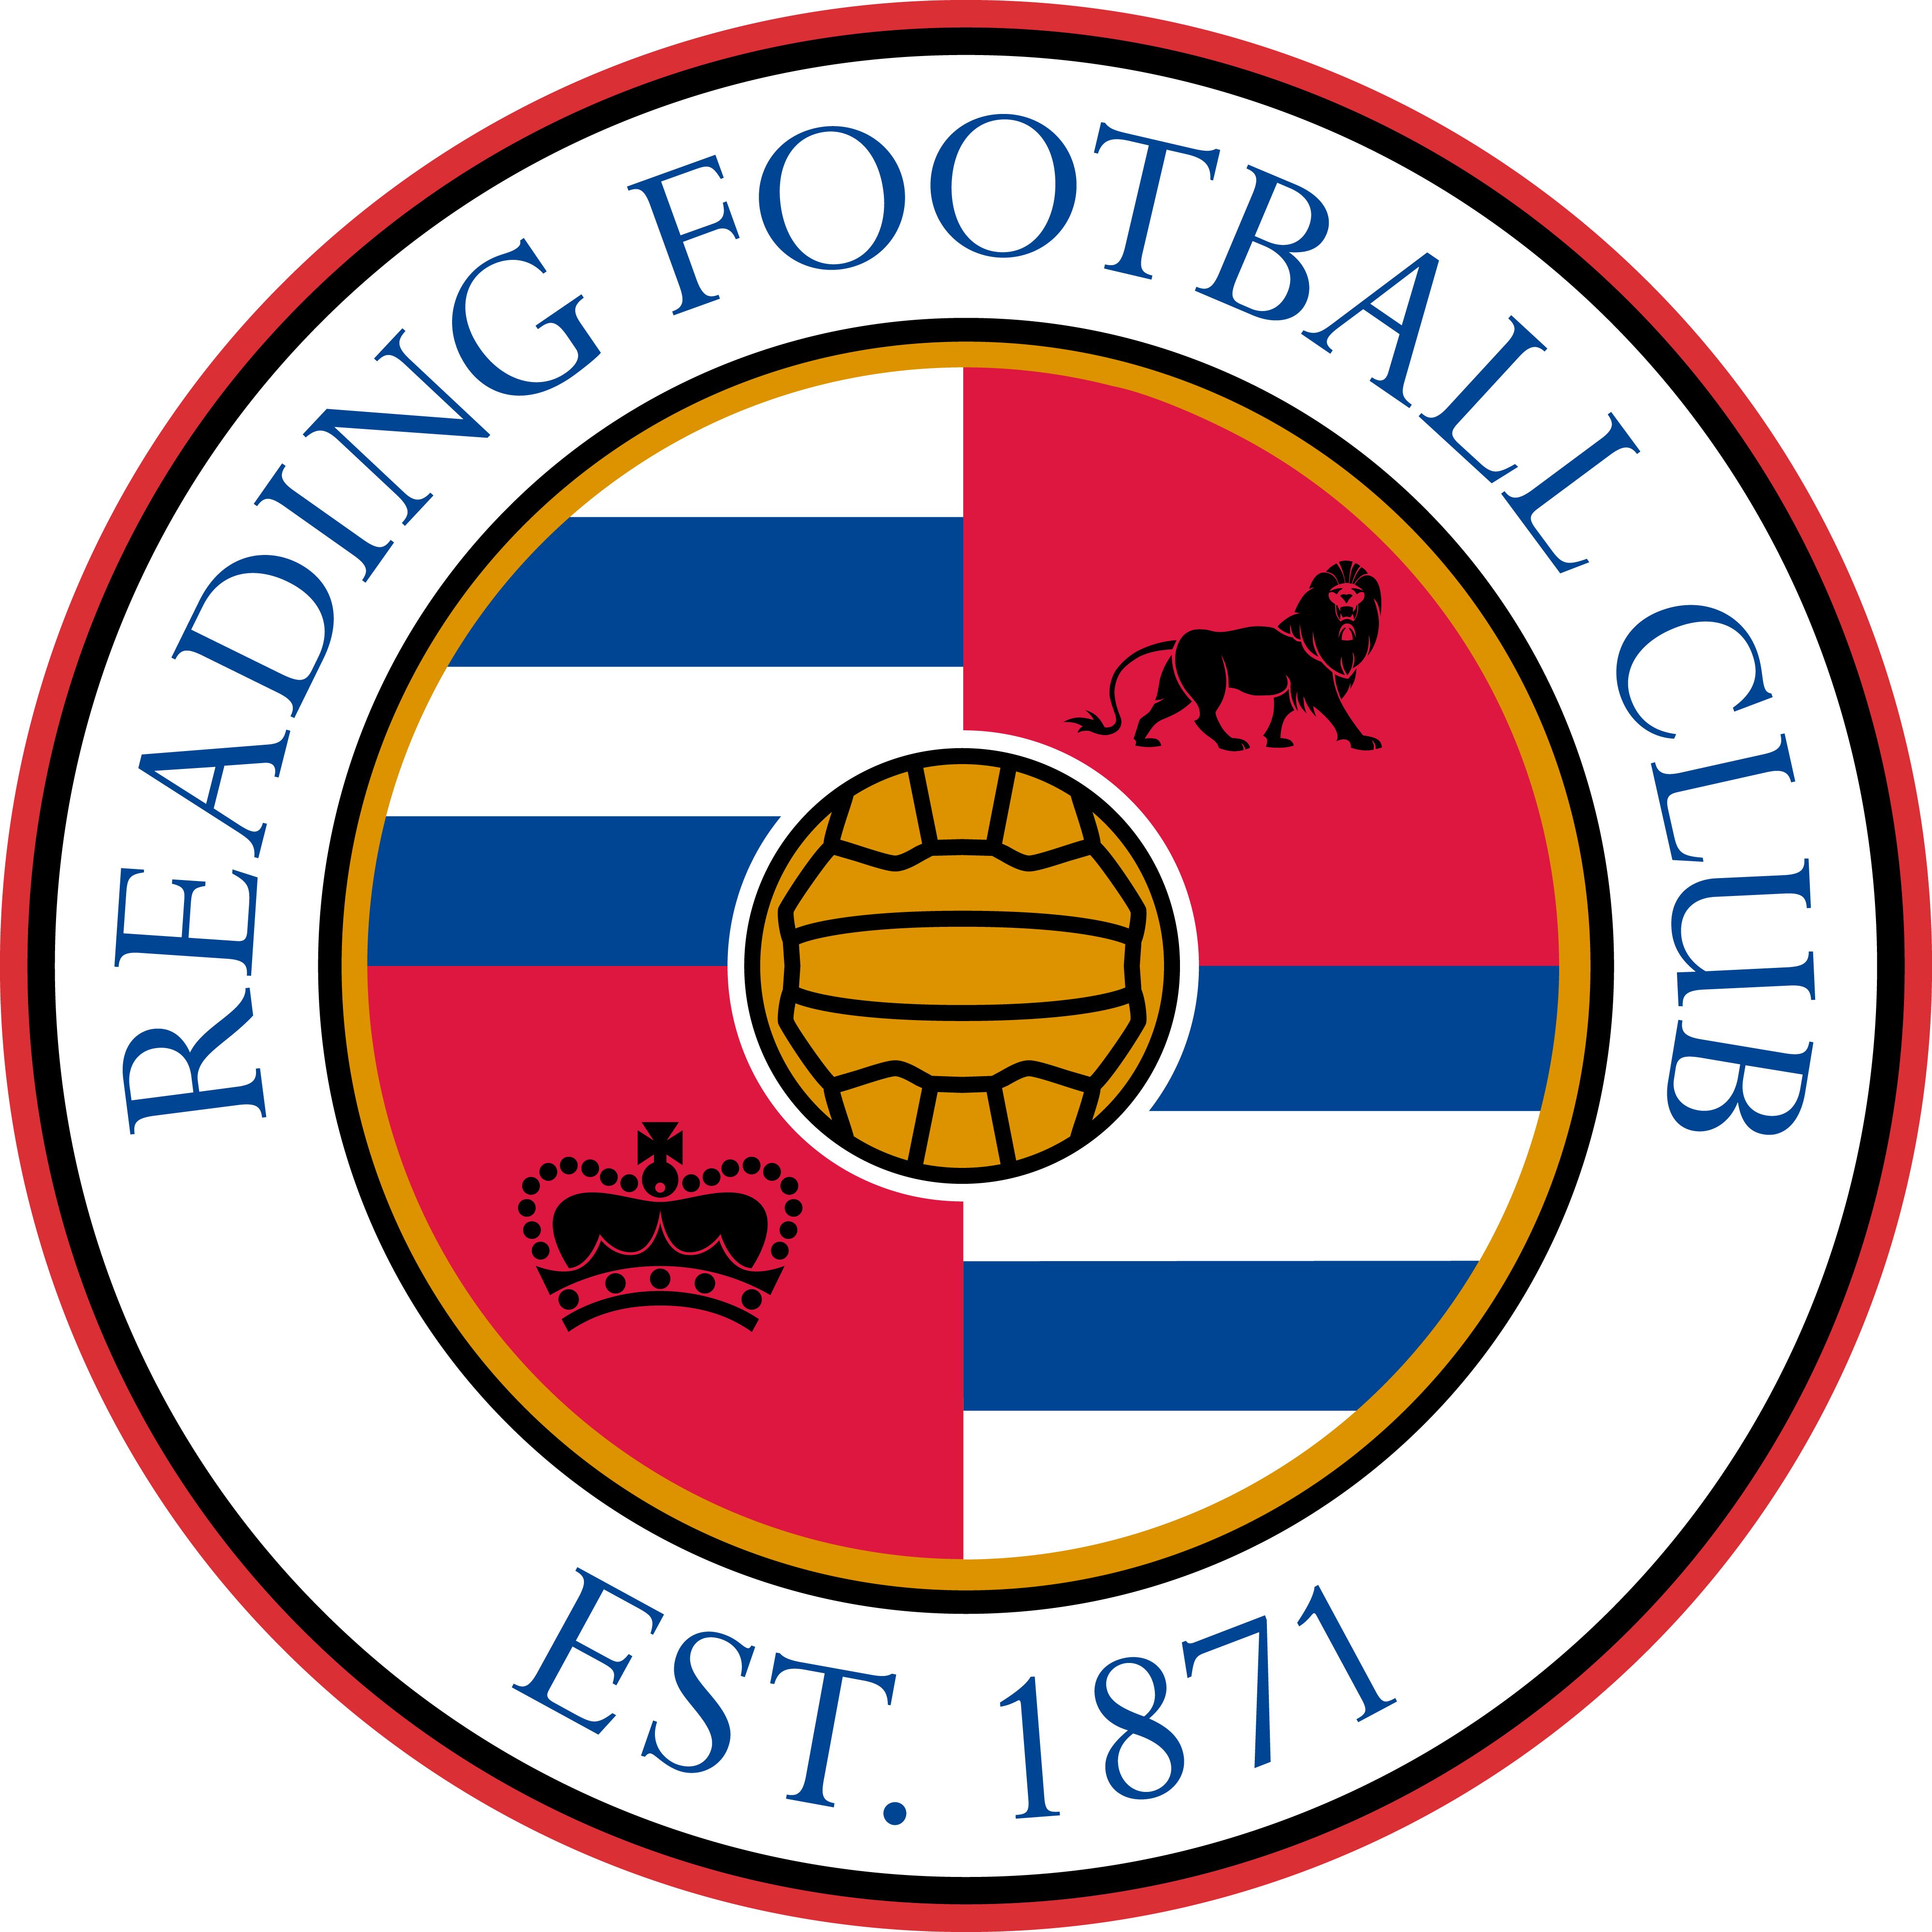 The logo of Reading Football Club. [Photo: Agencies]